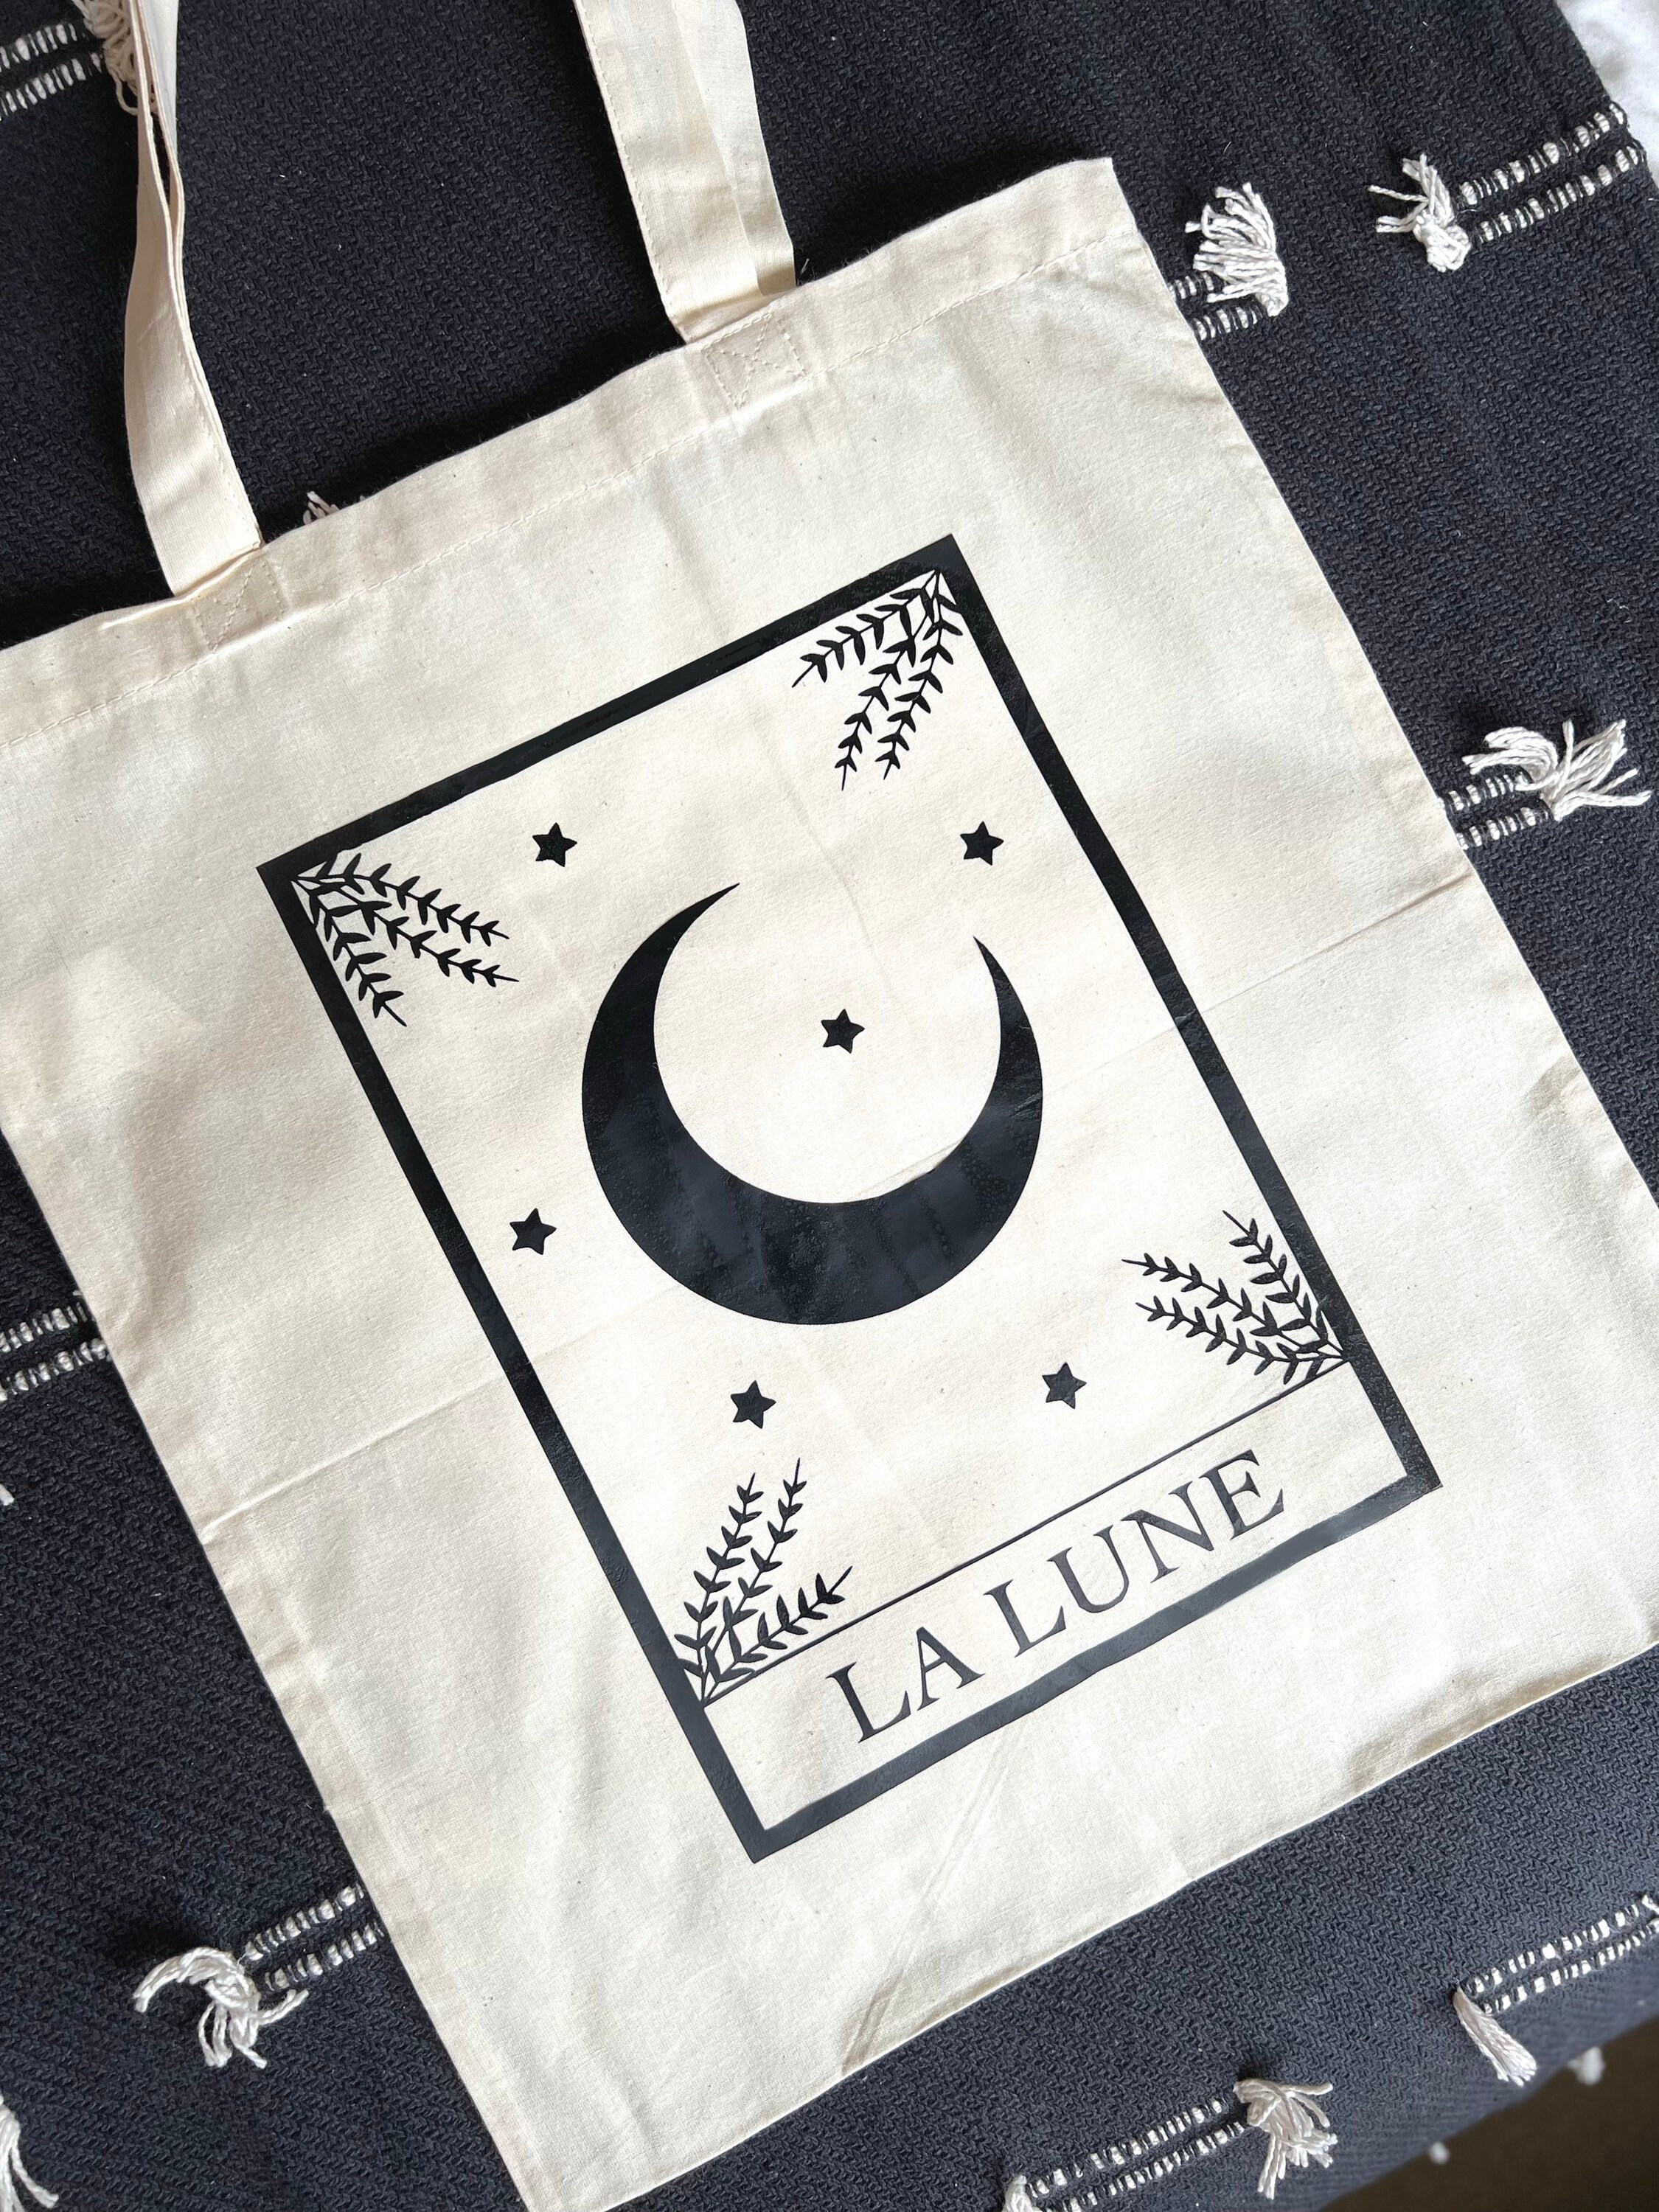 Moon Tote Bag, Natural Beige Tote Bag, La Lune Accessories, Celestial,  Tarot, Shopping Bag